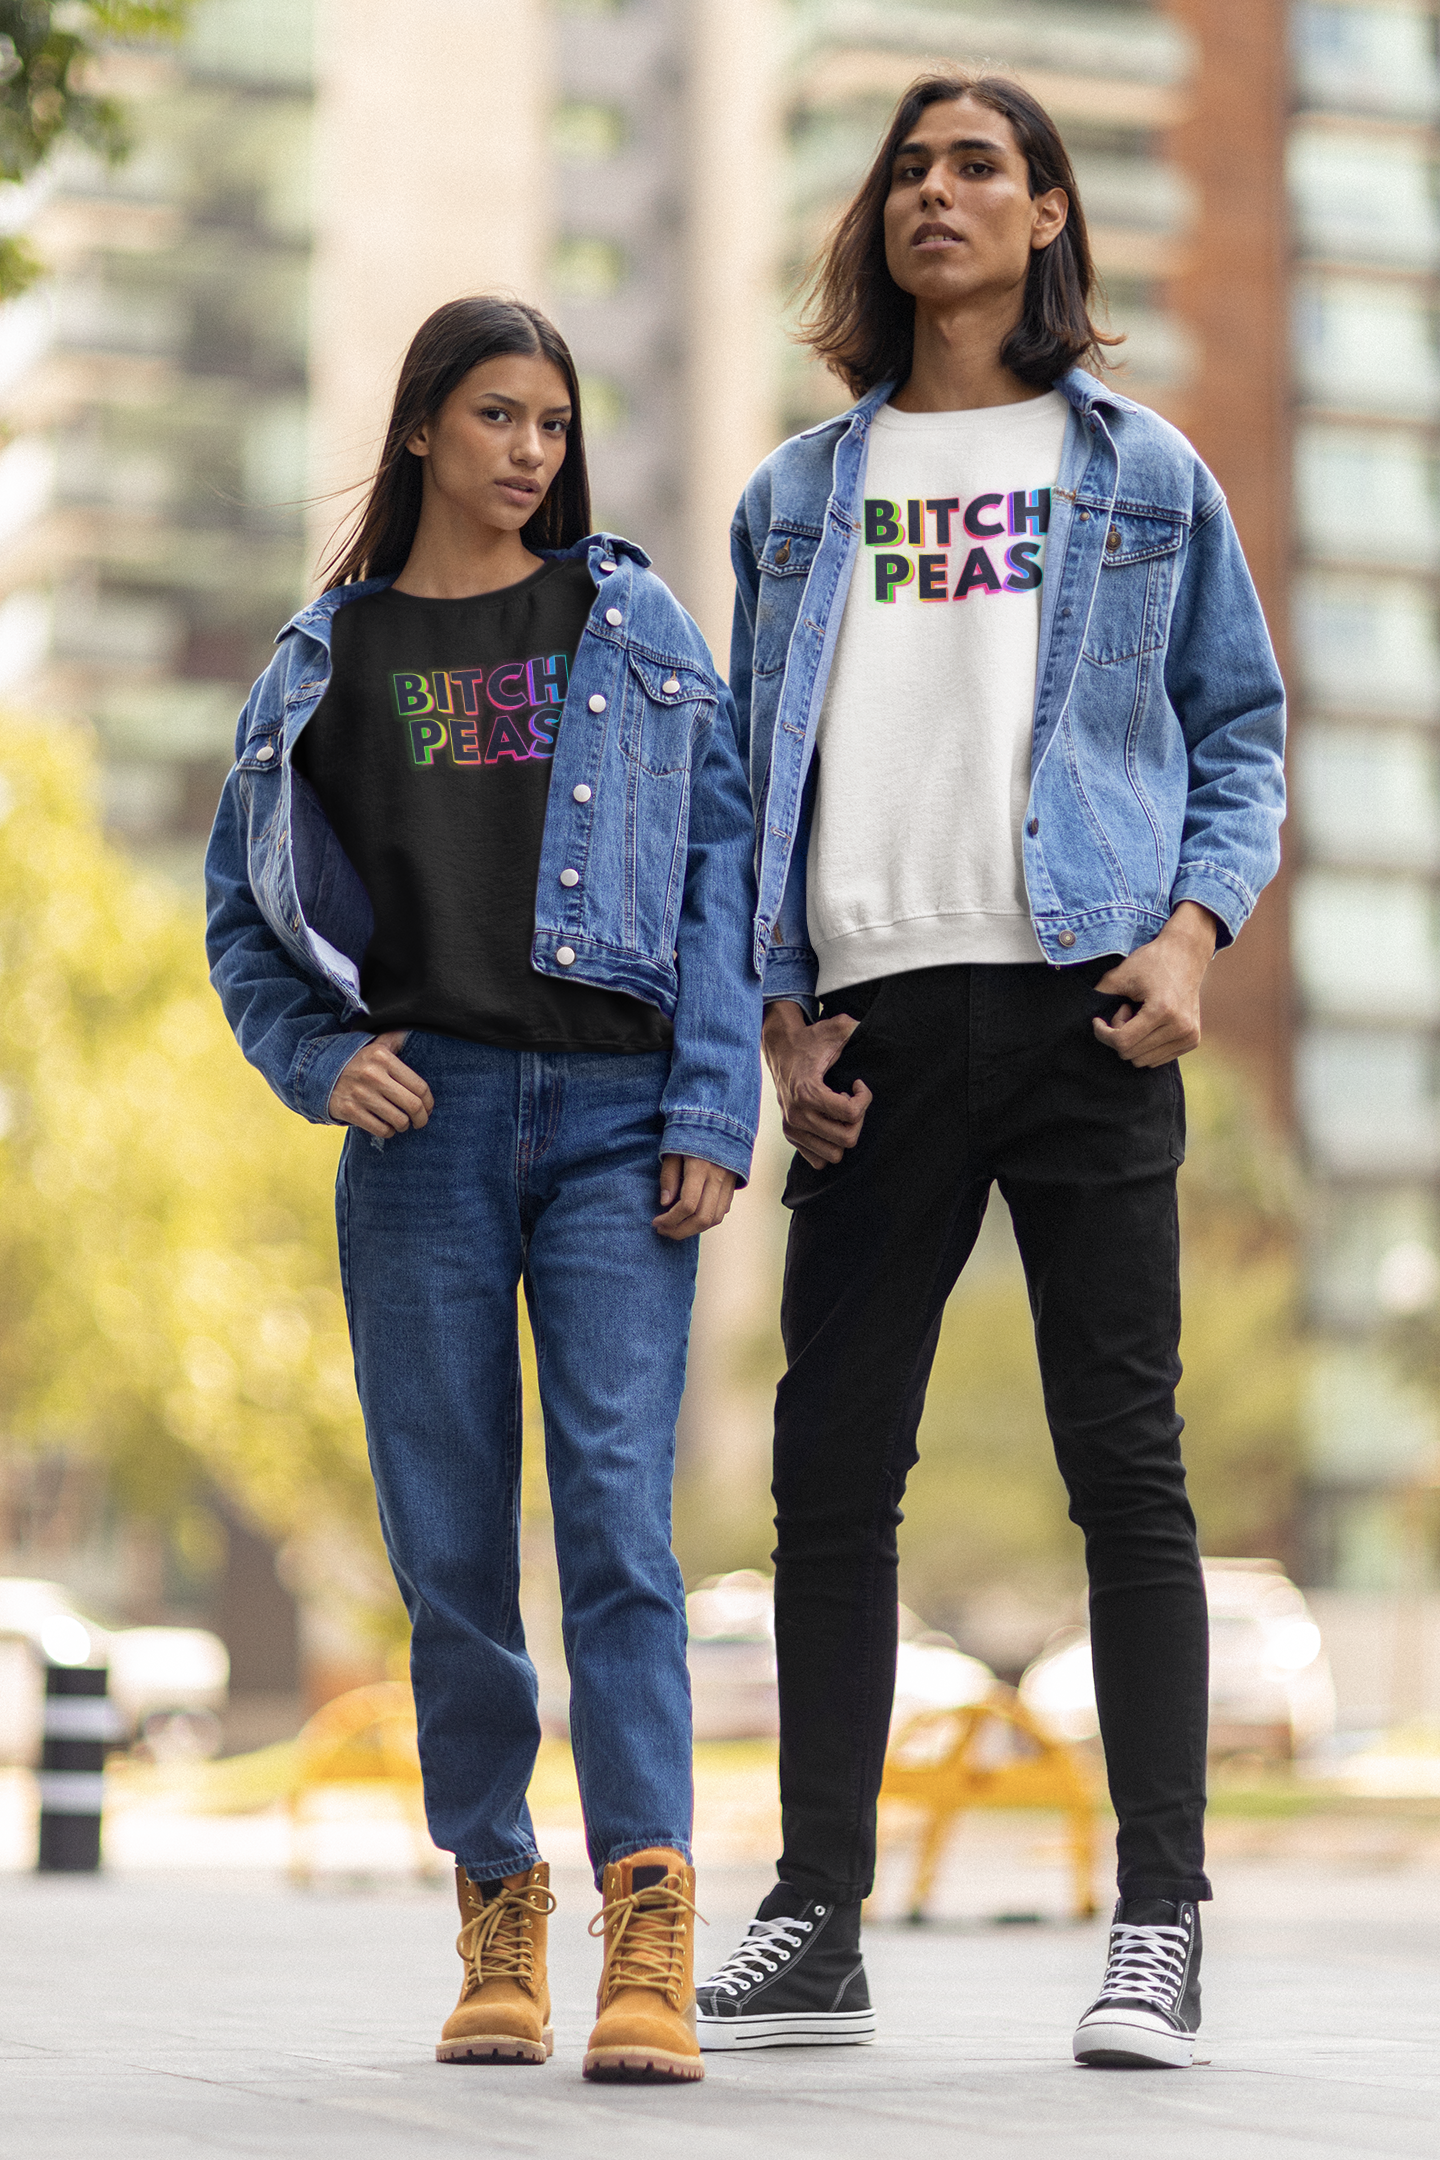 Bitch Peas Sweater Women/Unisex